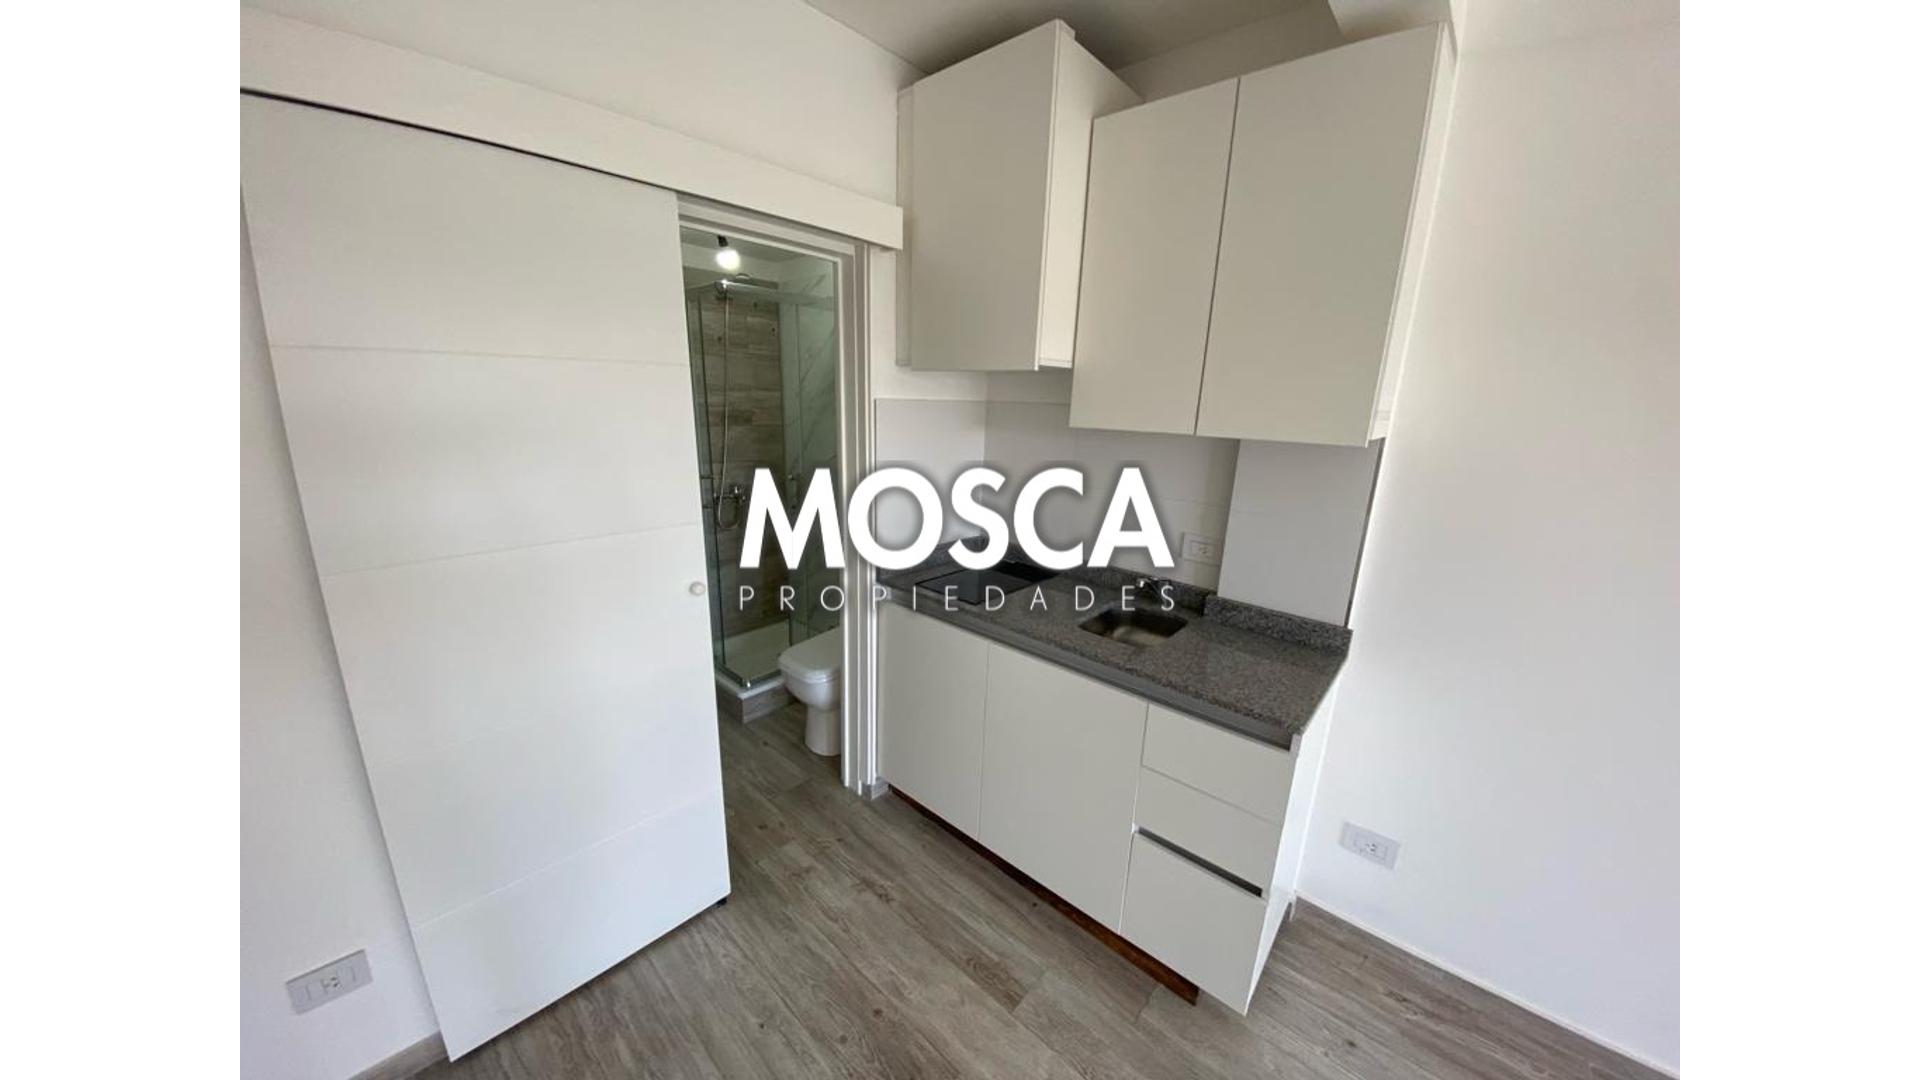 #4915676 | Sale | Apartment | Moreno (Mosca  Propiedades)